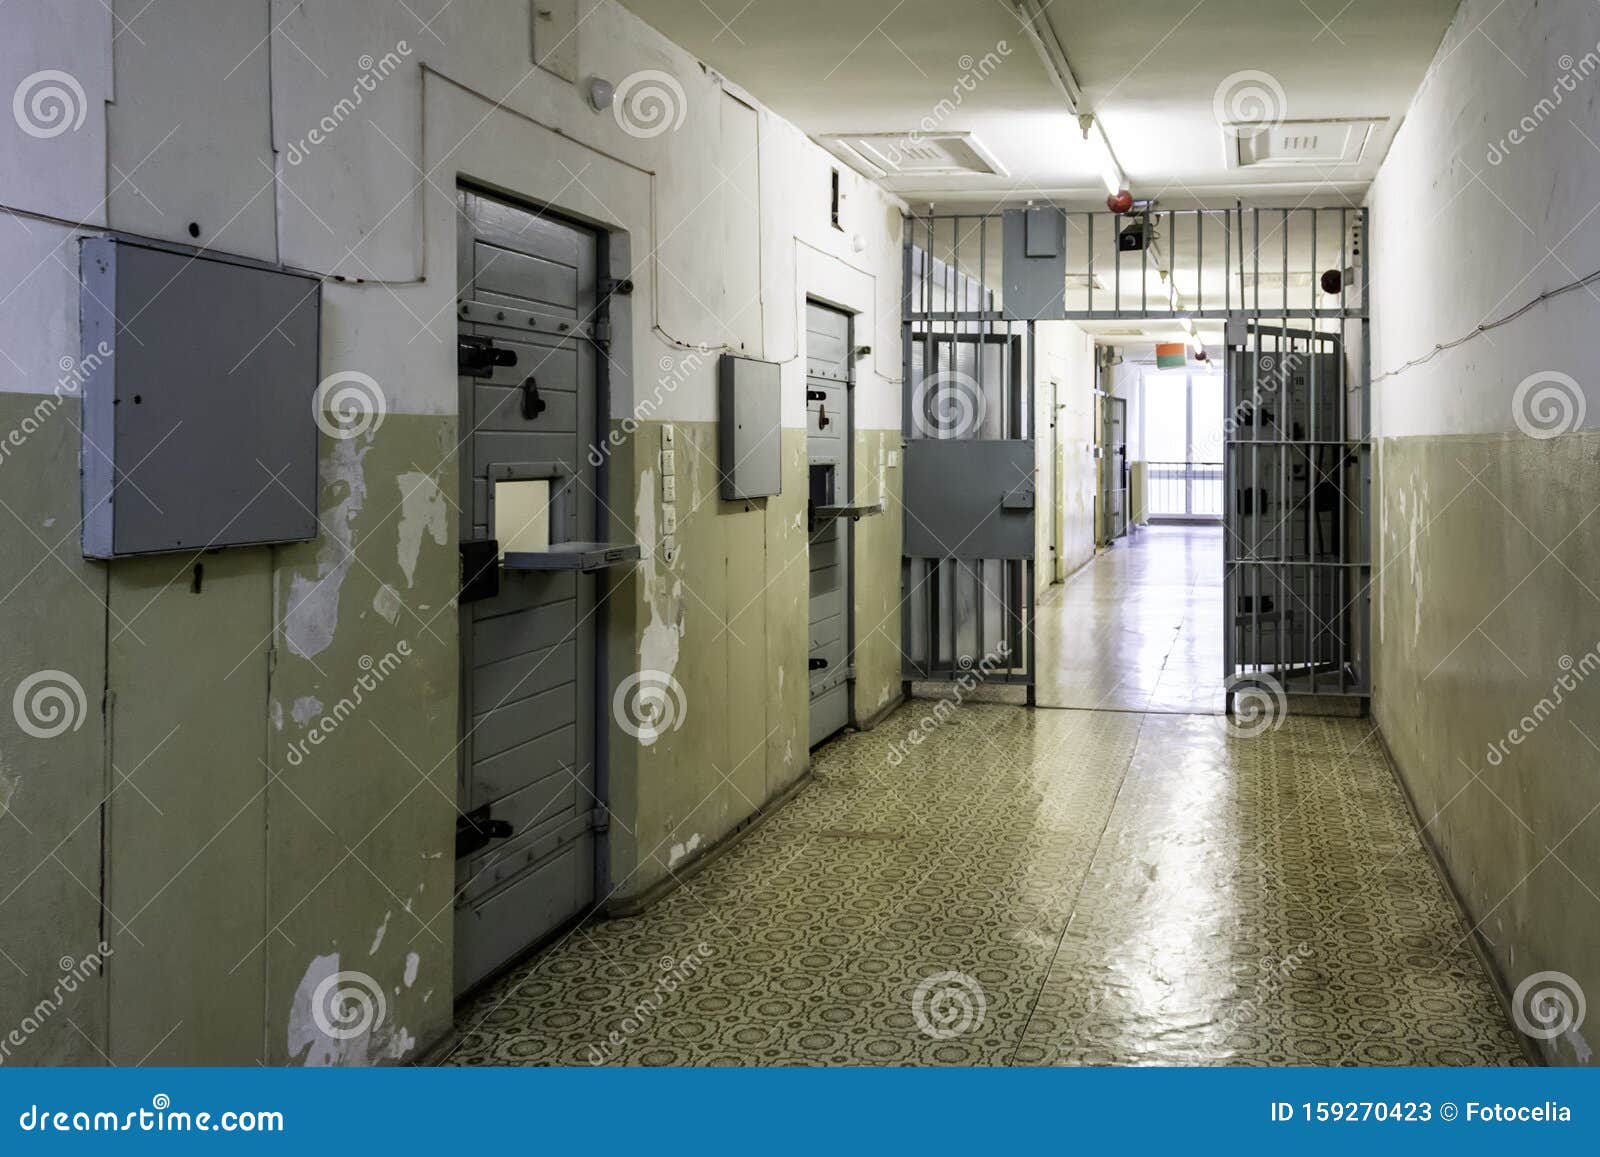 penitentiary jail